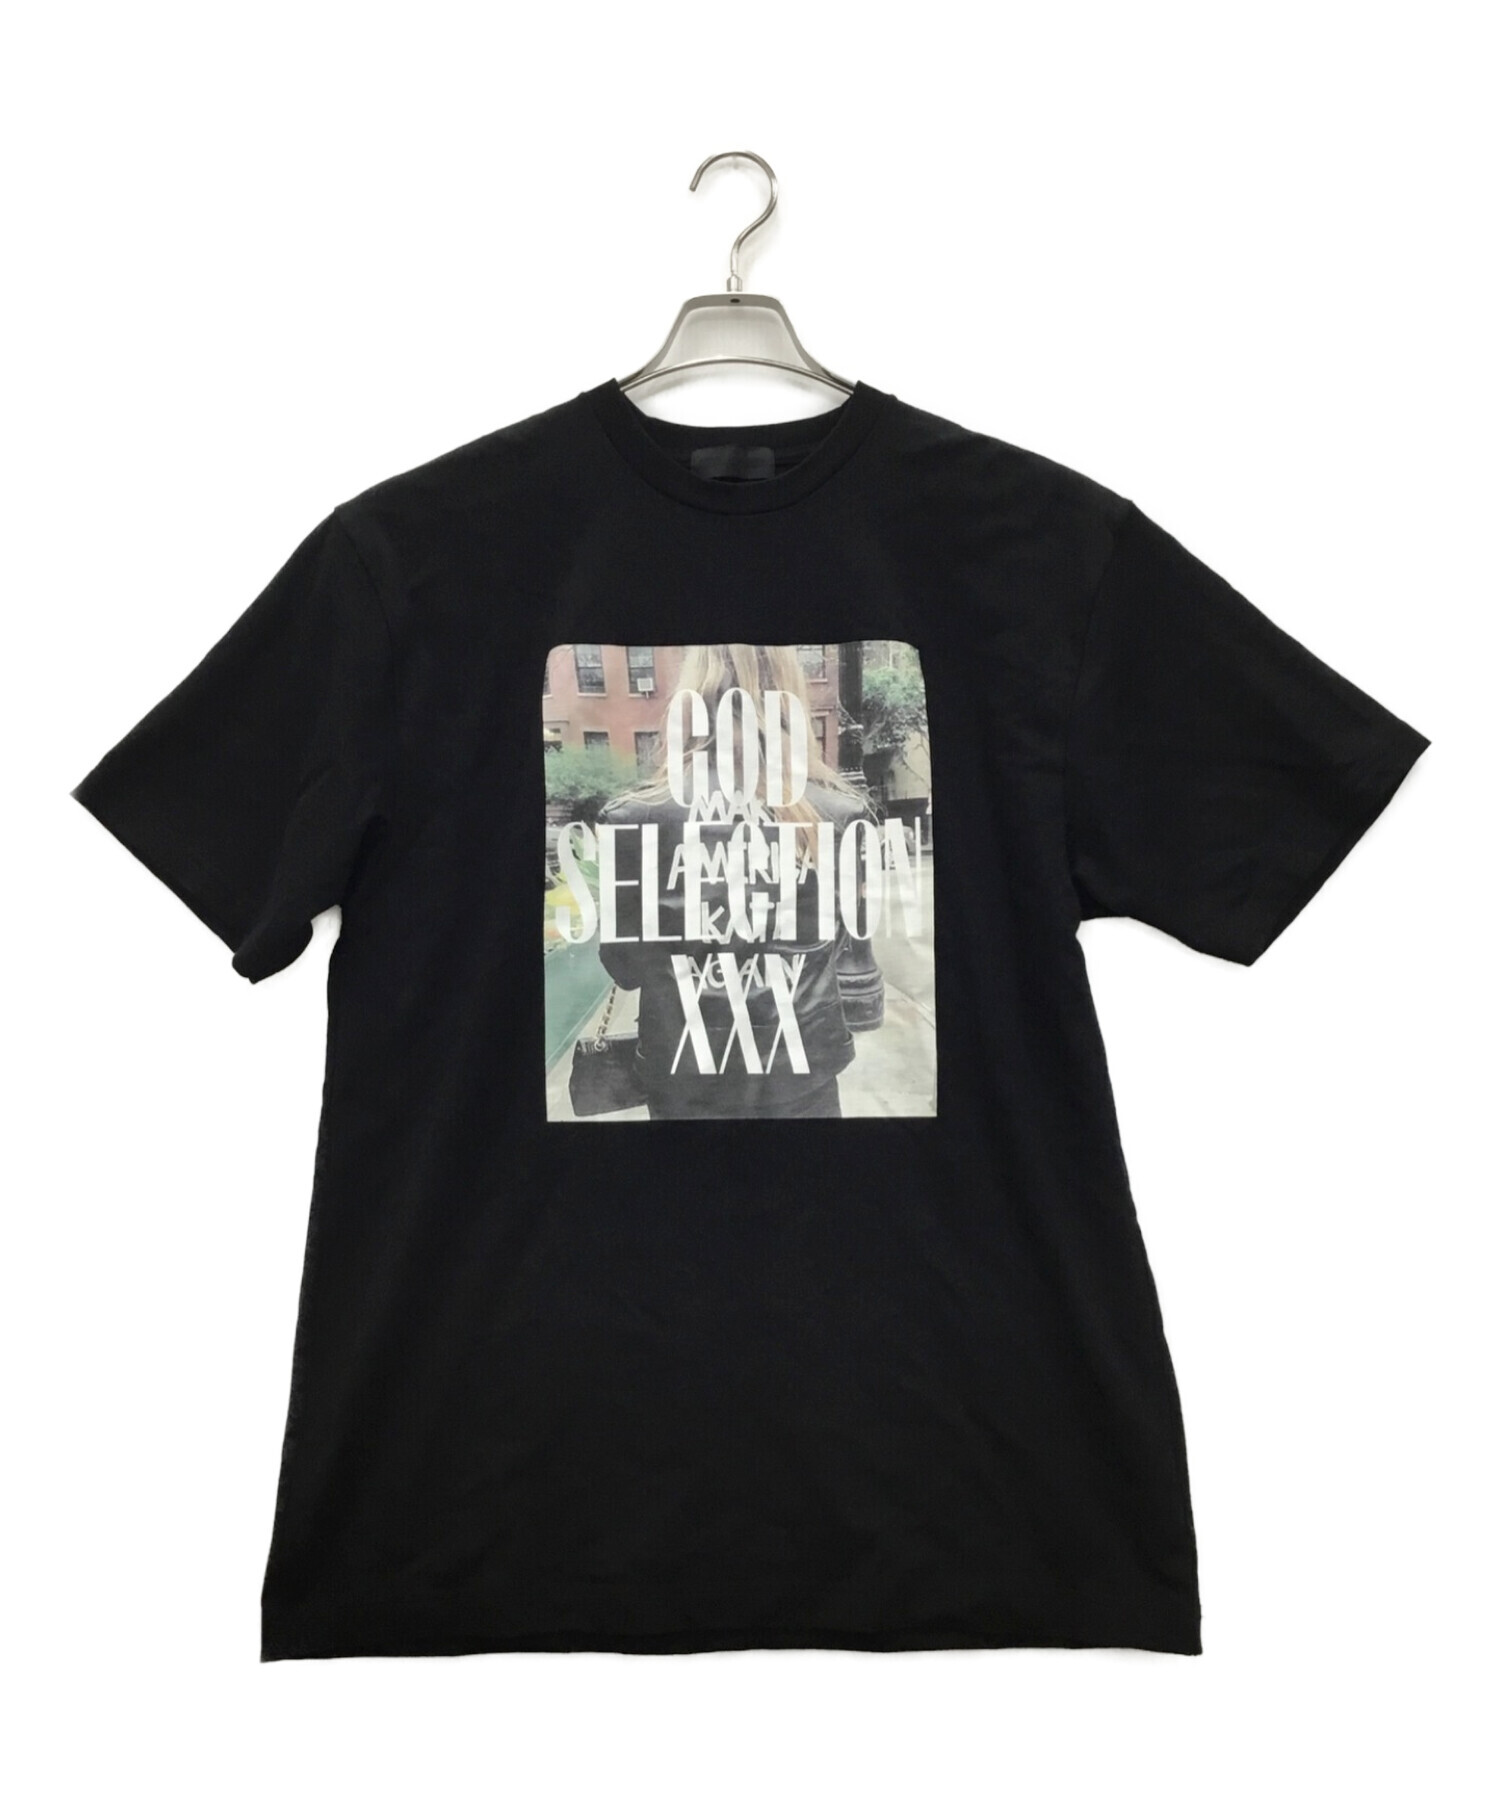 god selection xxx Tシャツトップス